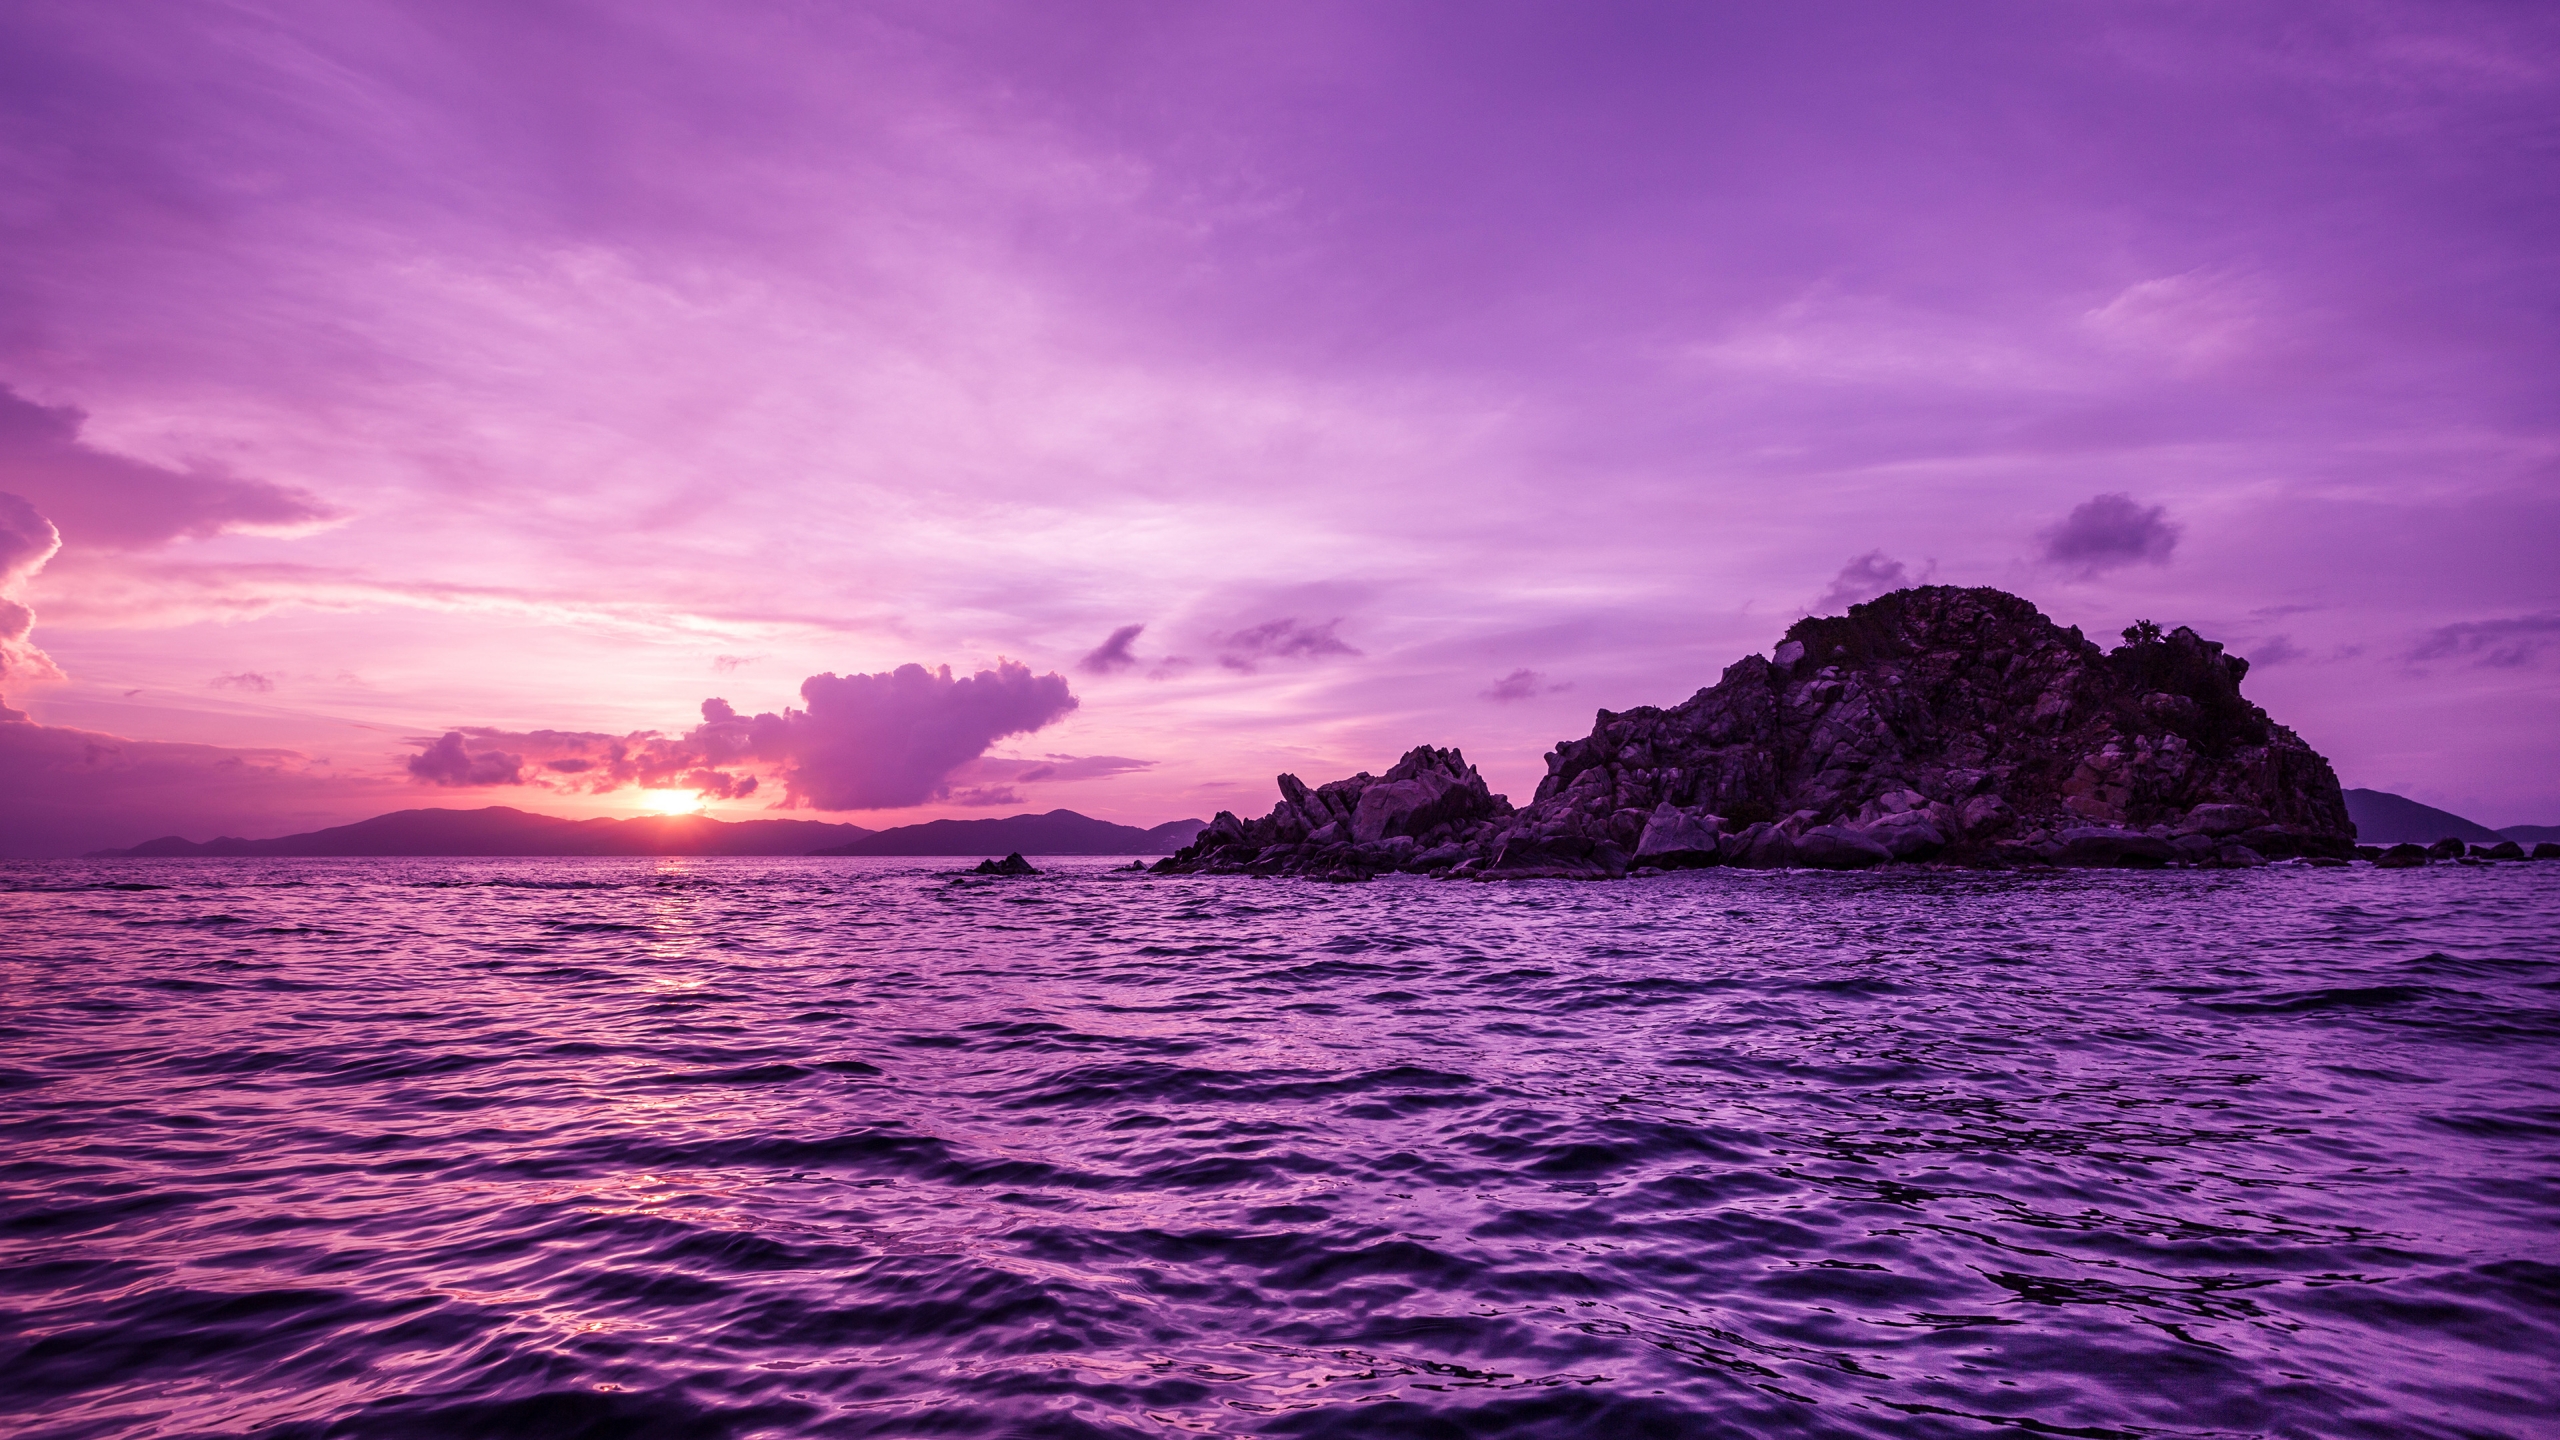 Pelican Island Sunset for 2560x1440 HDTV resolution